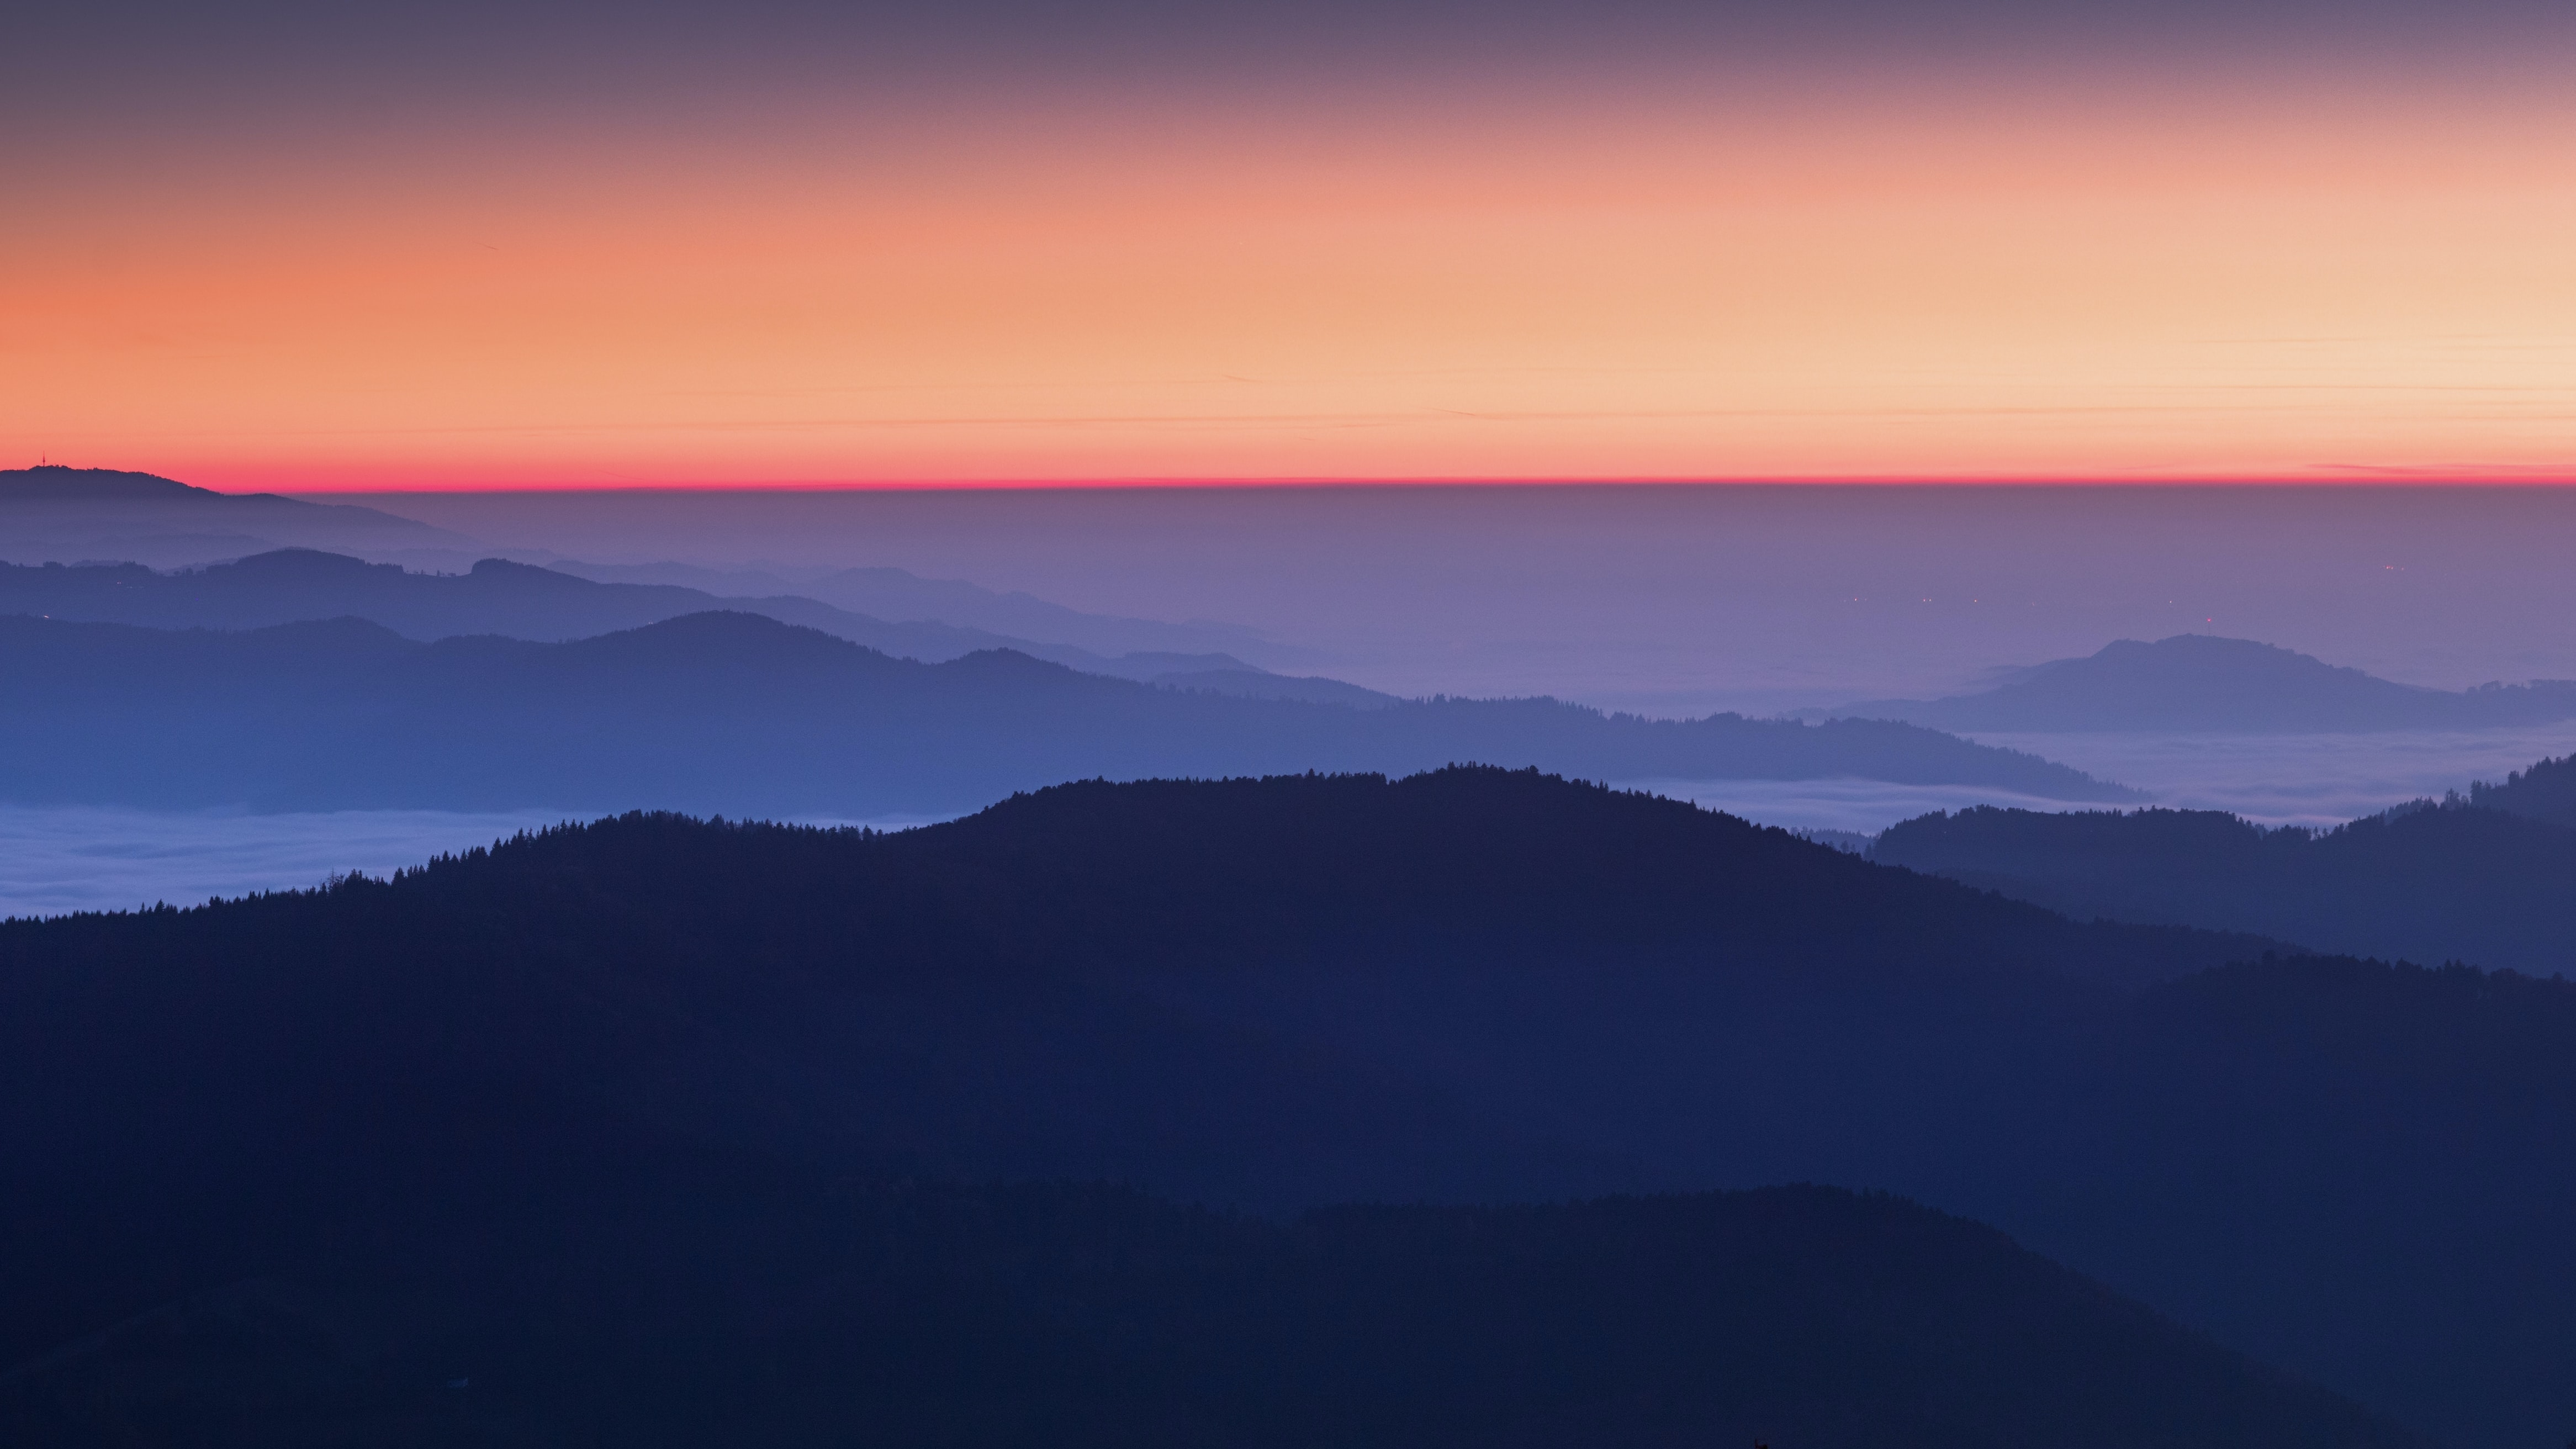 HD wallpaper, Foggy, Mountains, Sky View, Mountain Range, 5K, Sunset Orange